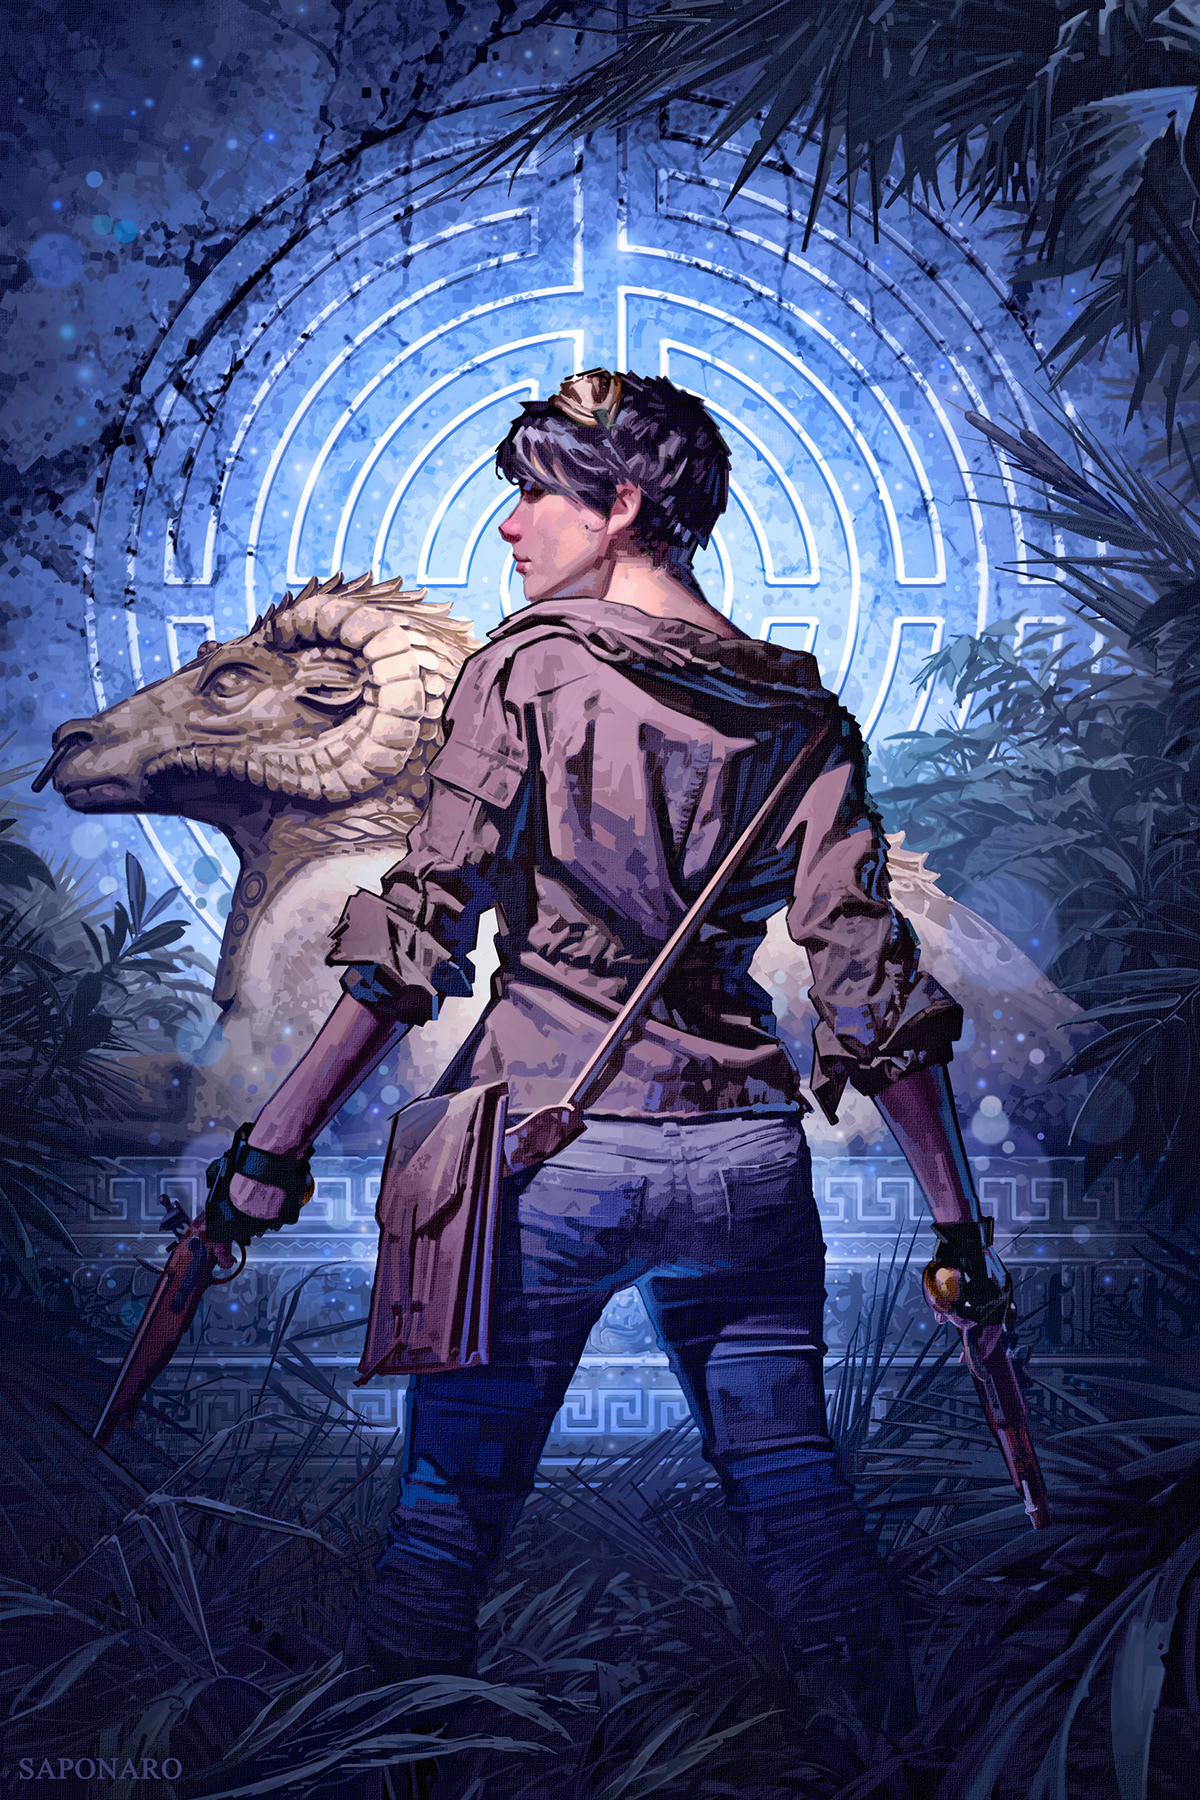 Dominick Saponaro art fantasy science fiction adventure digital painting book cover